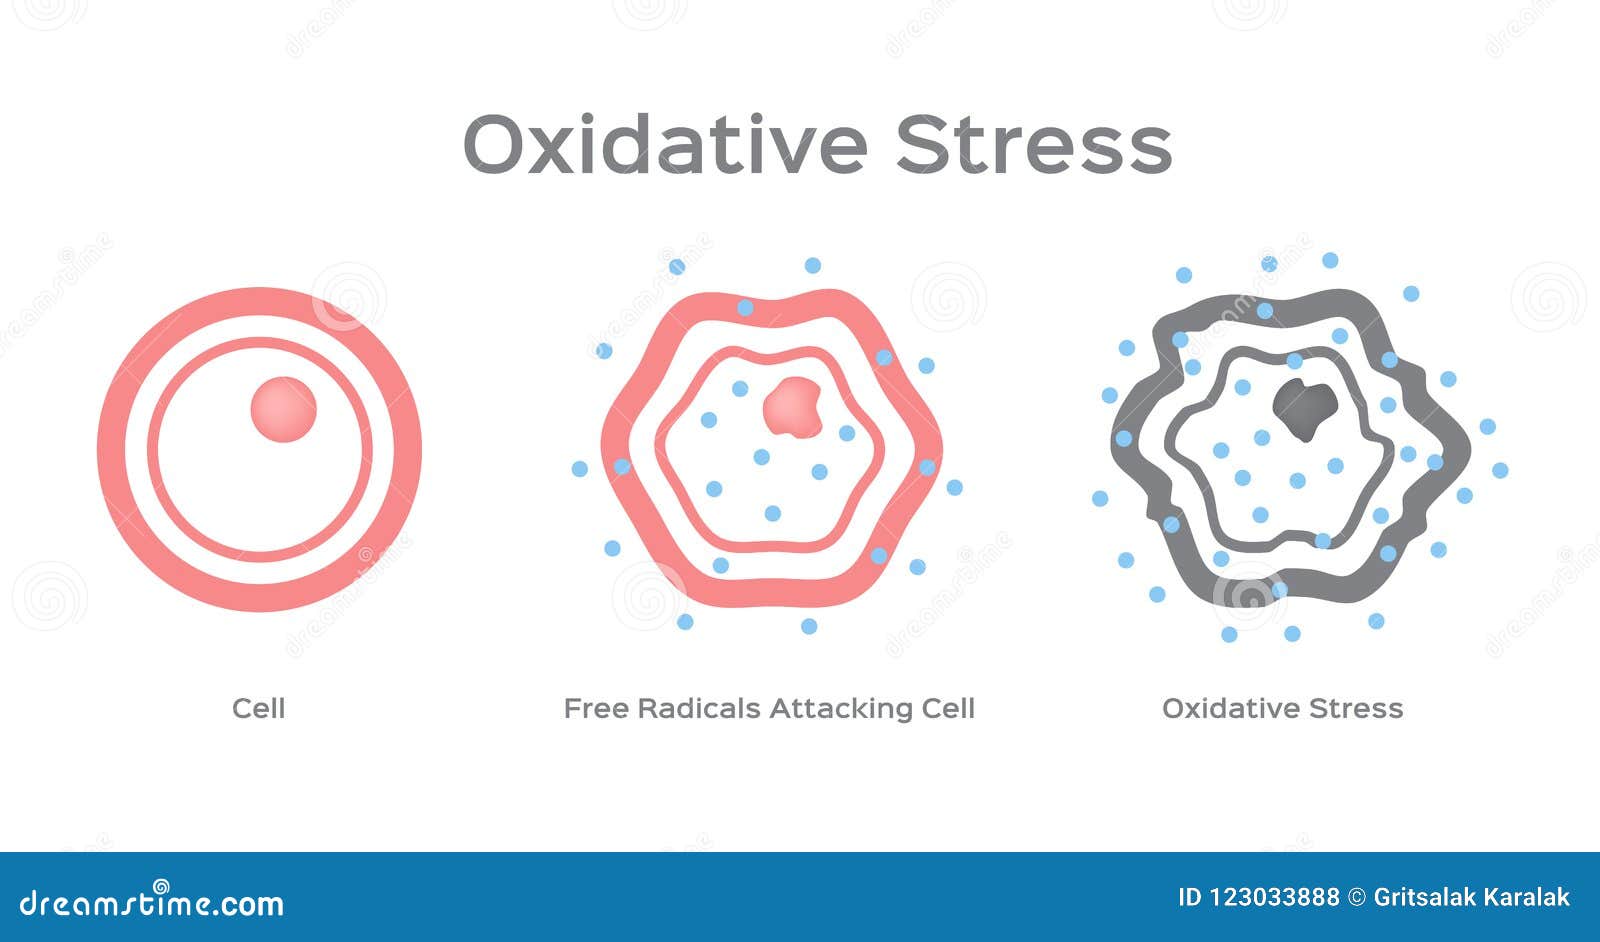 oxidative stress cell / free radical